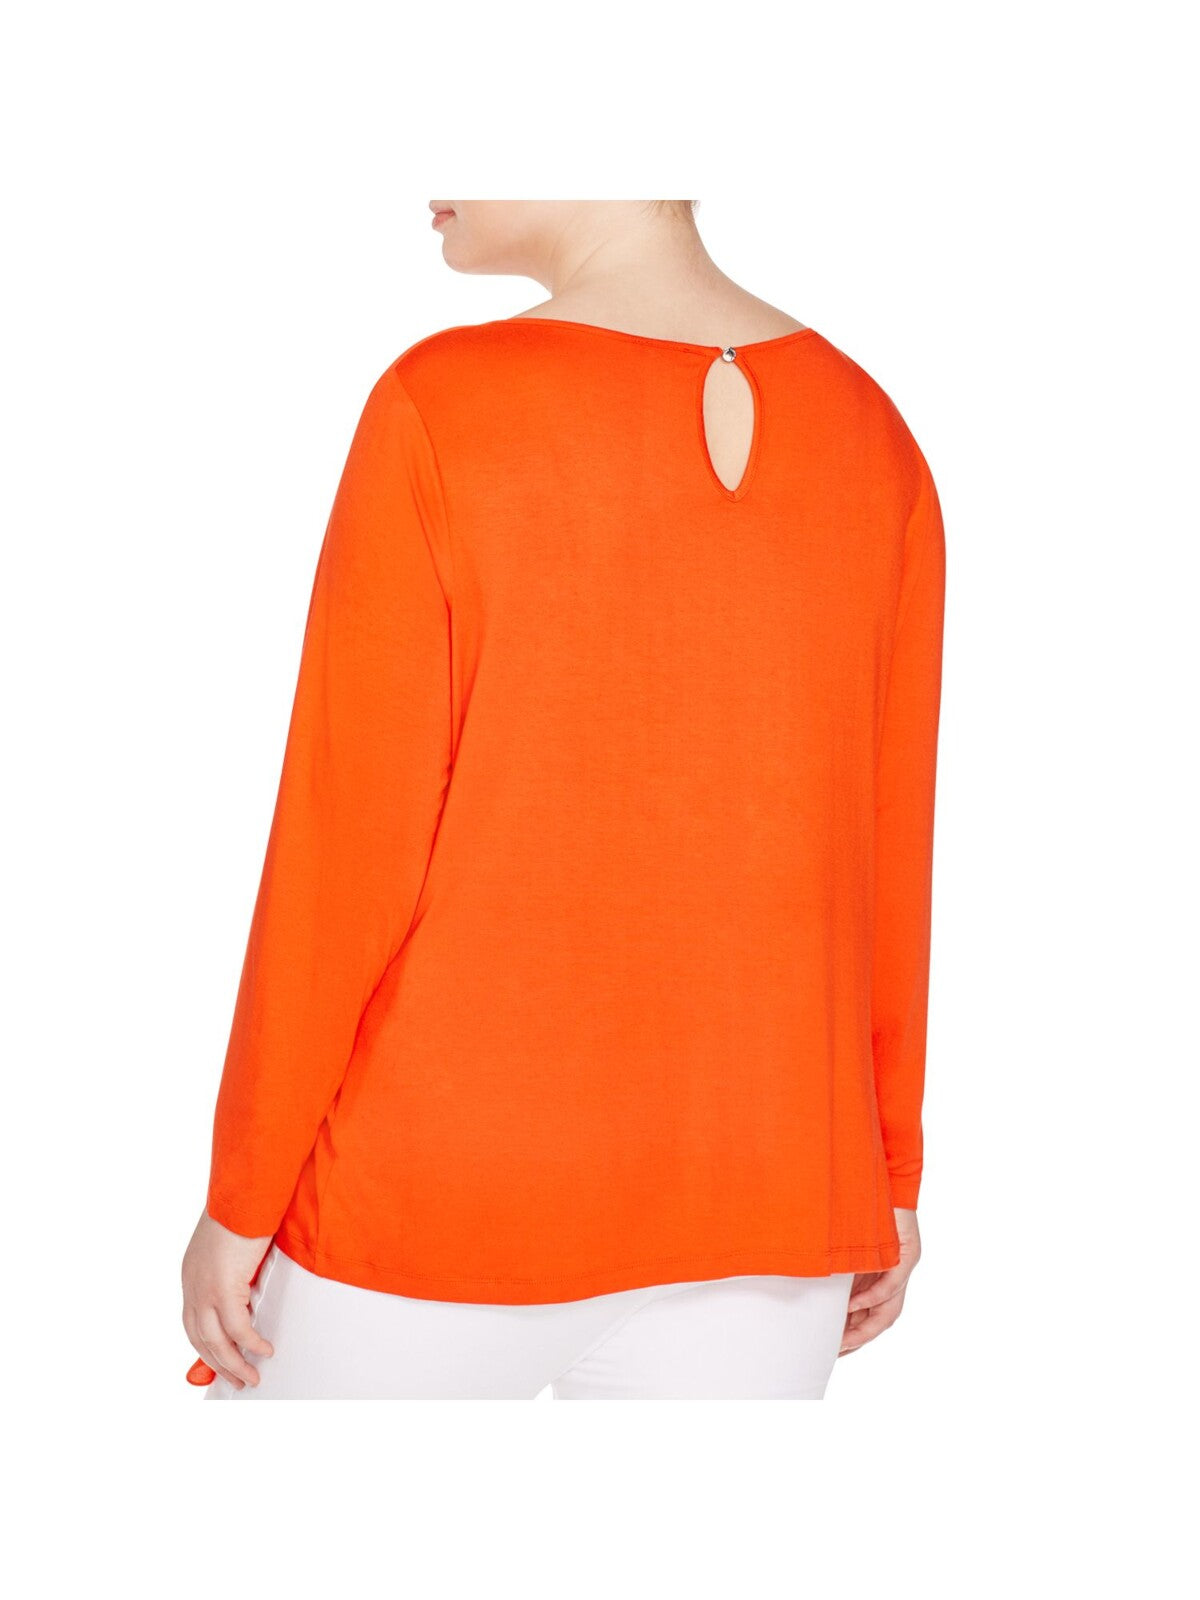 VINCE CAMUTO Womens Orange Sheer Asymmetrical Overlay, Long Sleeve Scoop Neck Blouse Plus 2X